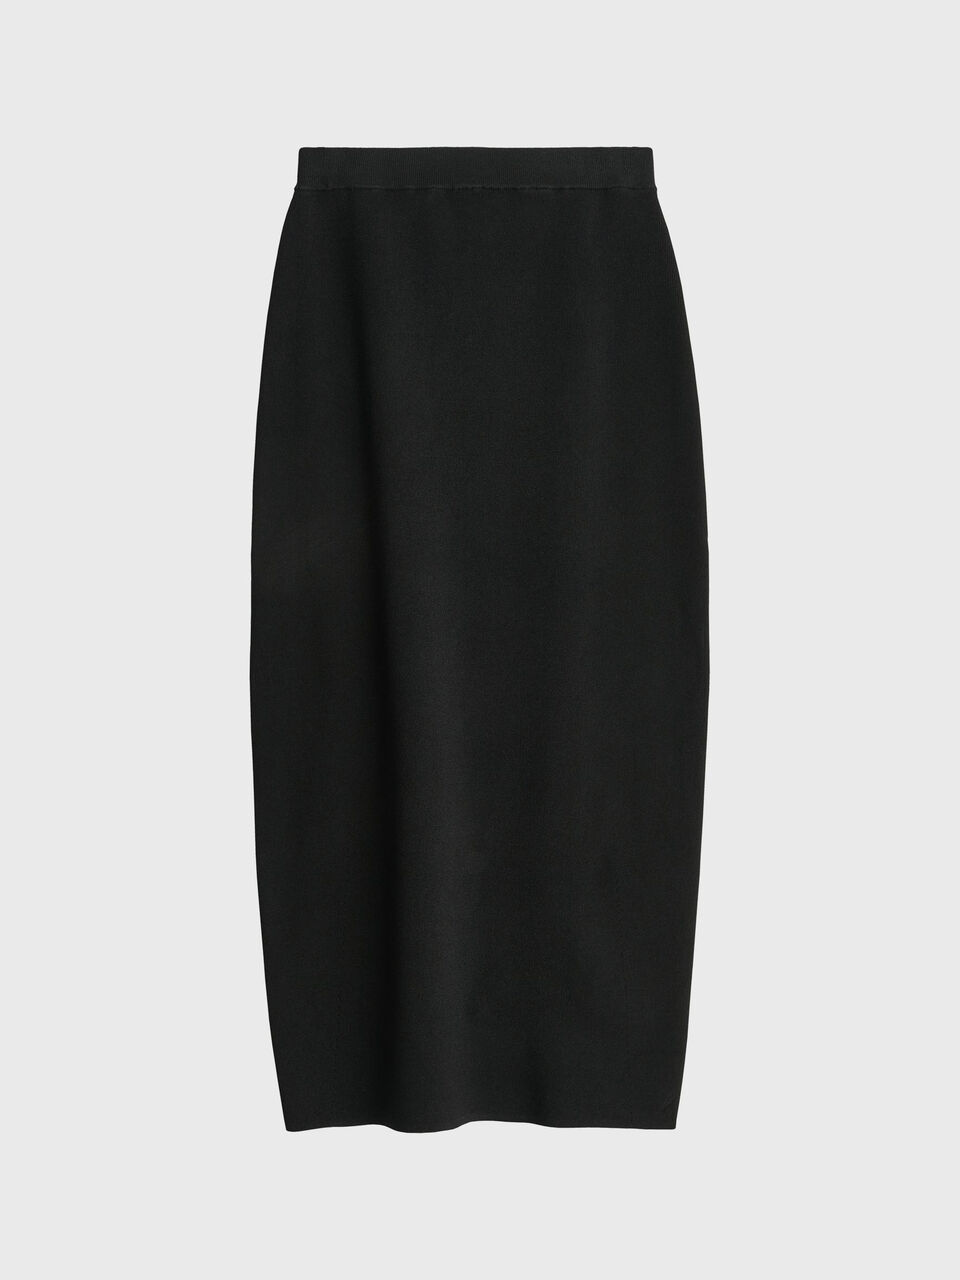 Tonira midi-skirt - Buy online